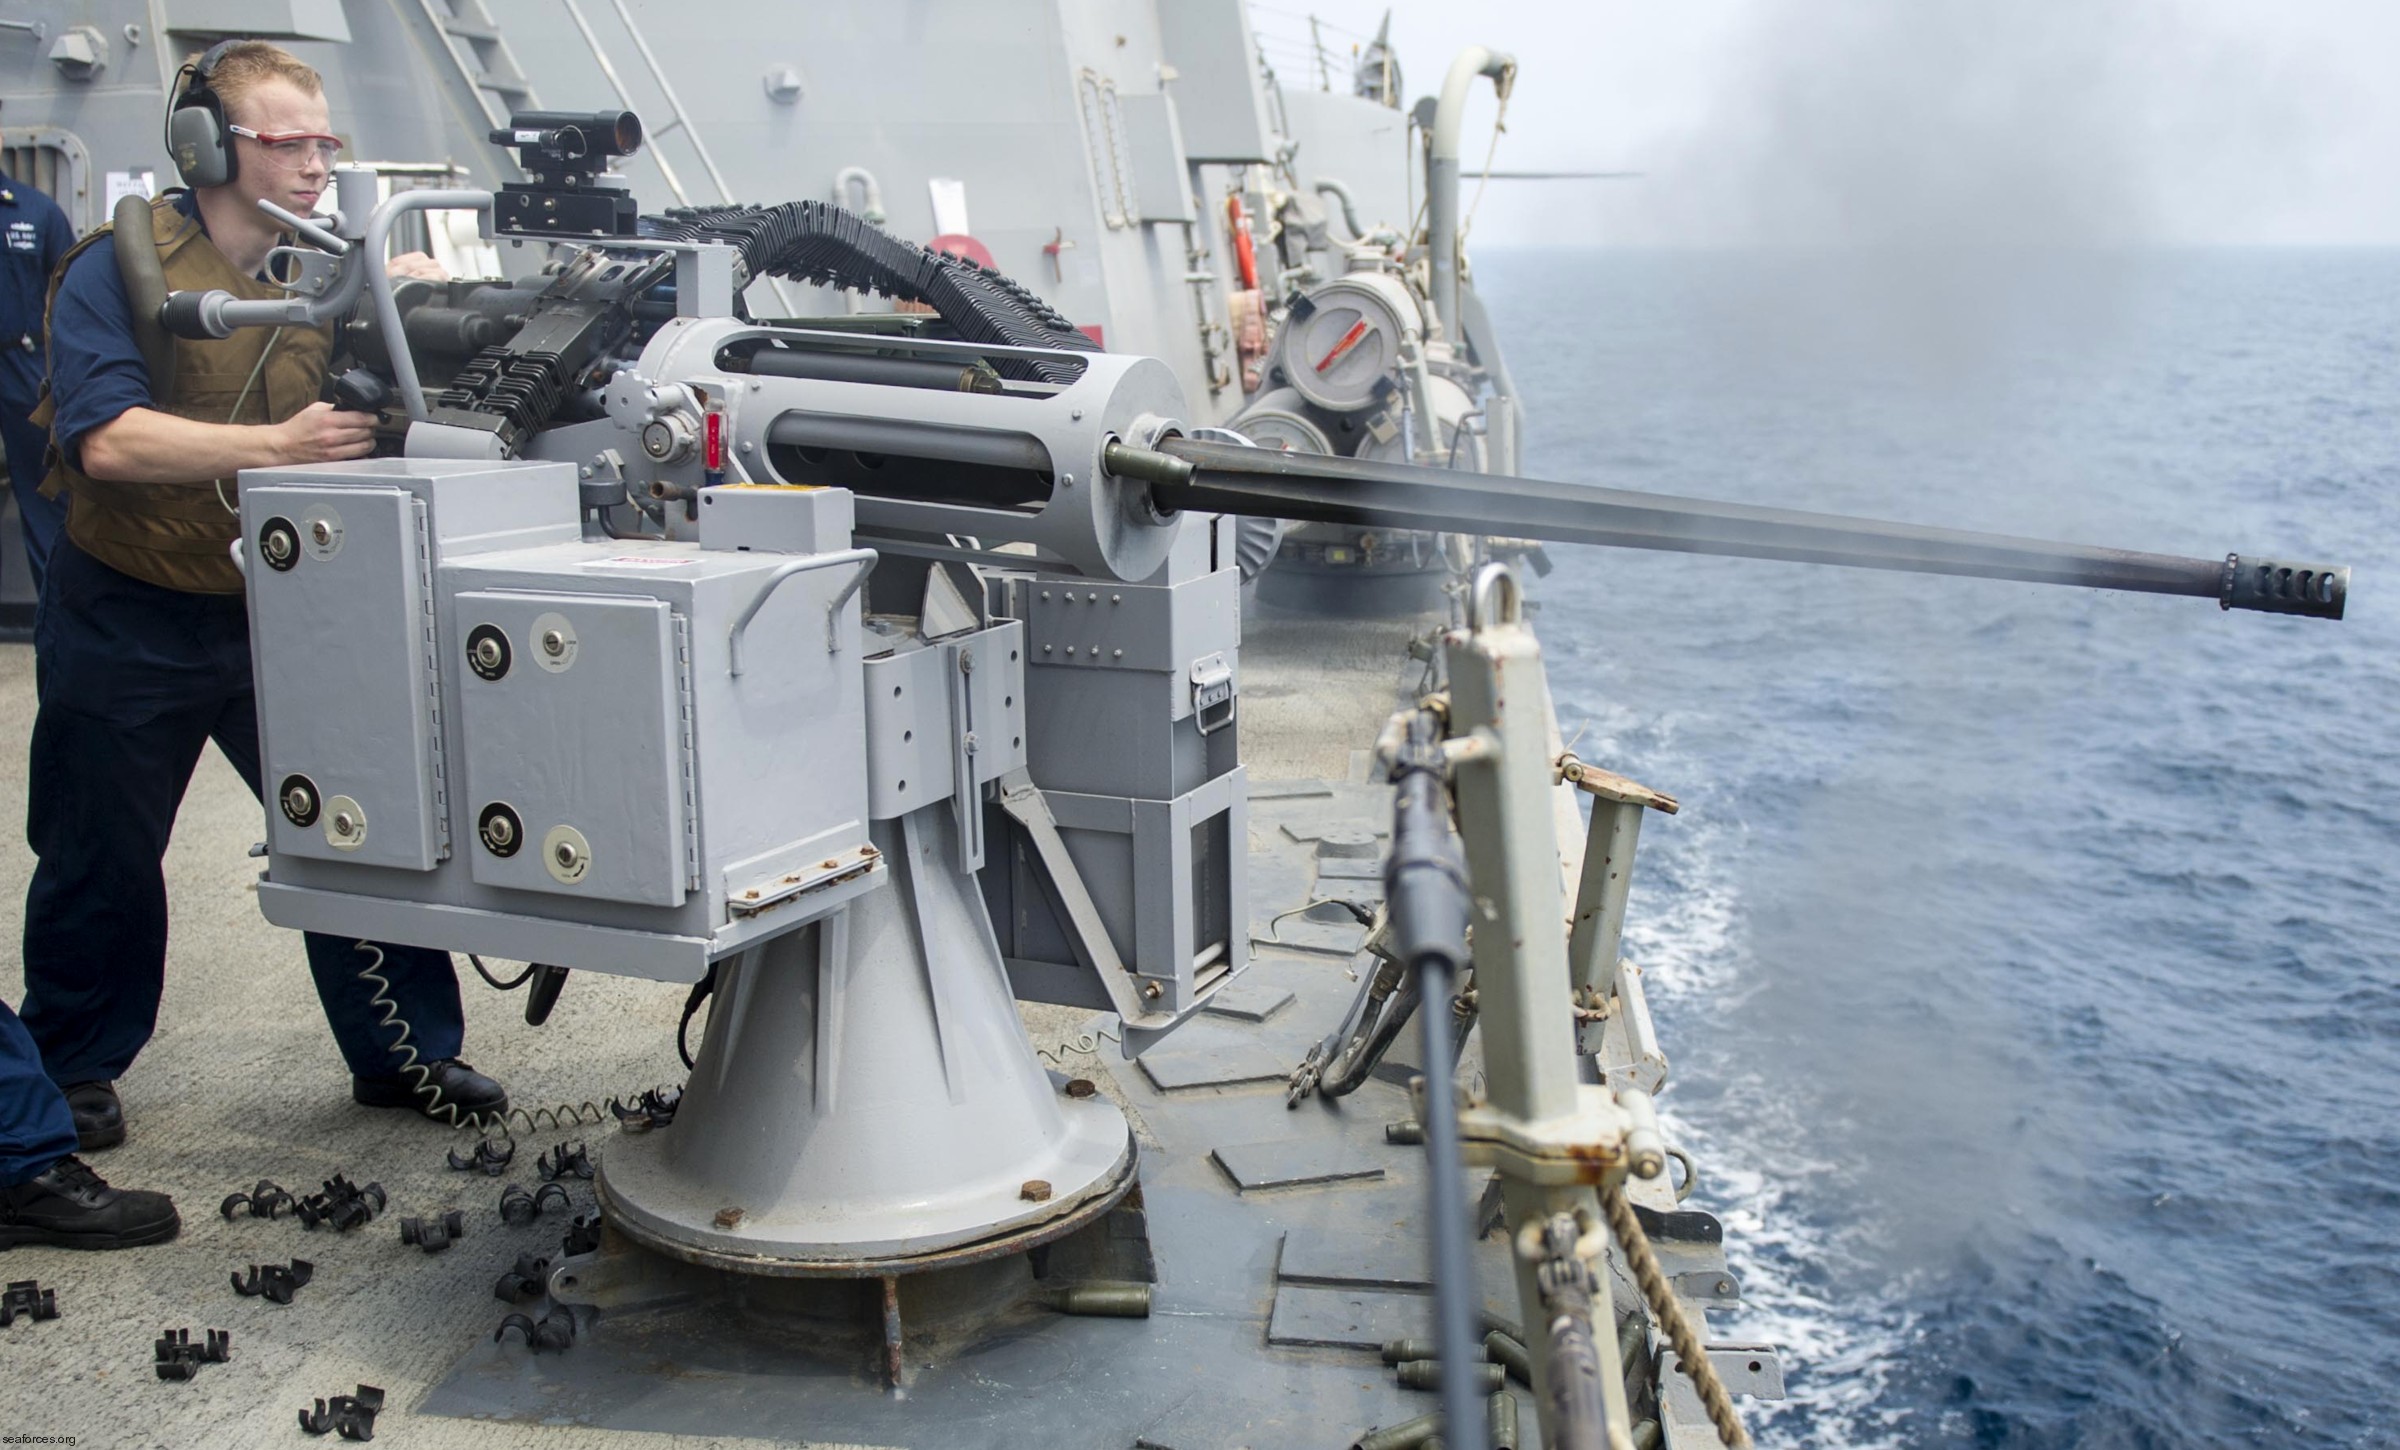 ddg-80 uss roosevelt guided missile destroyer arleigh burke class us navy 43 mk. 38 mod.1 25mm machine gun system mgs